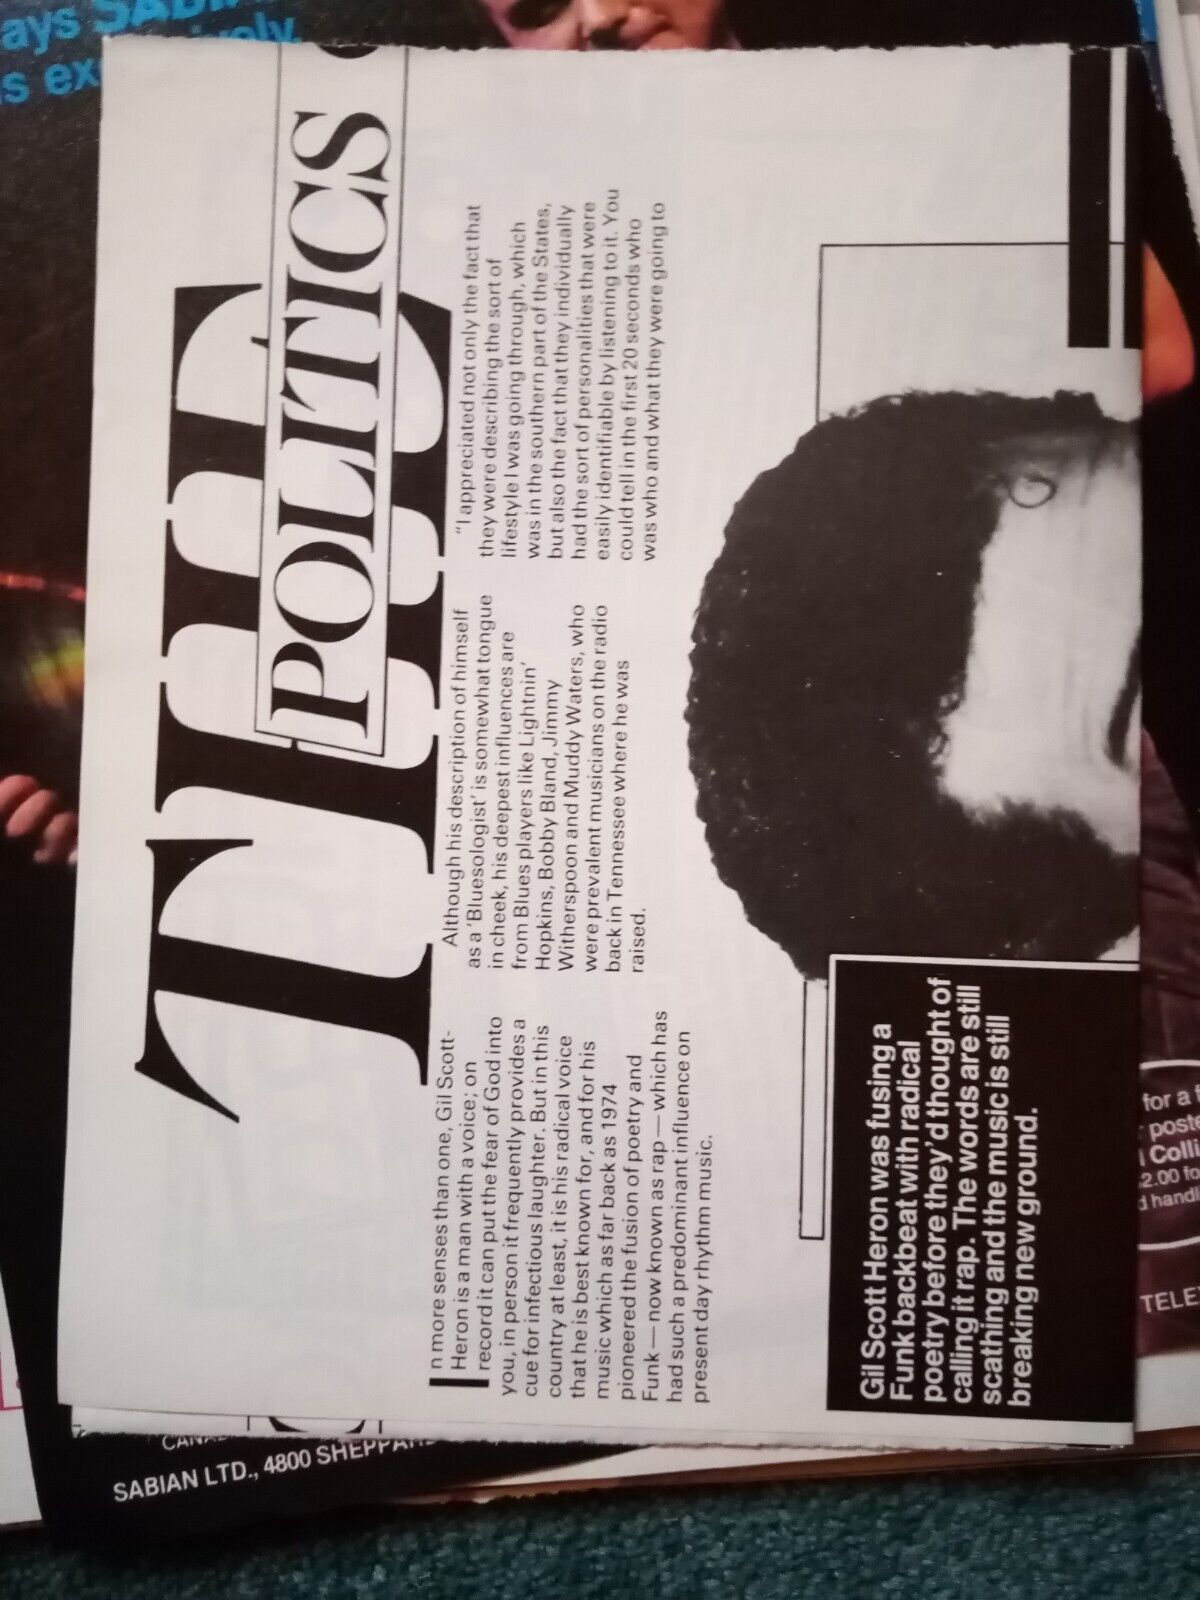 Kvc34 Ephemera 1985 pop article gil Scott heron 